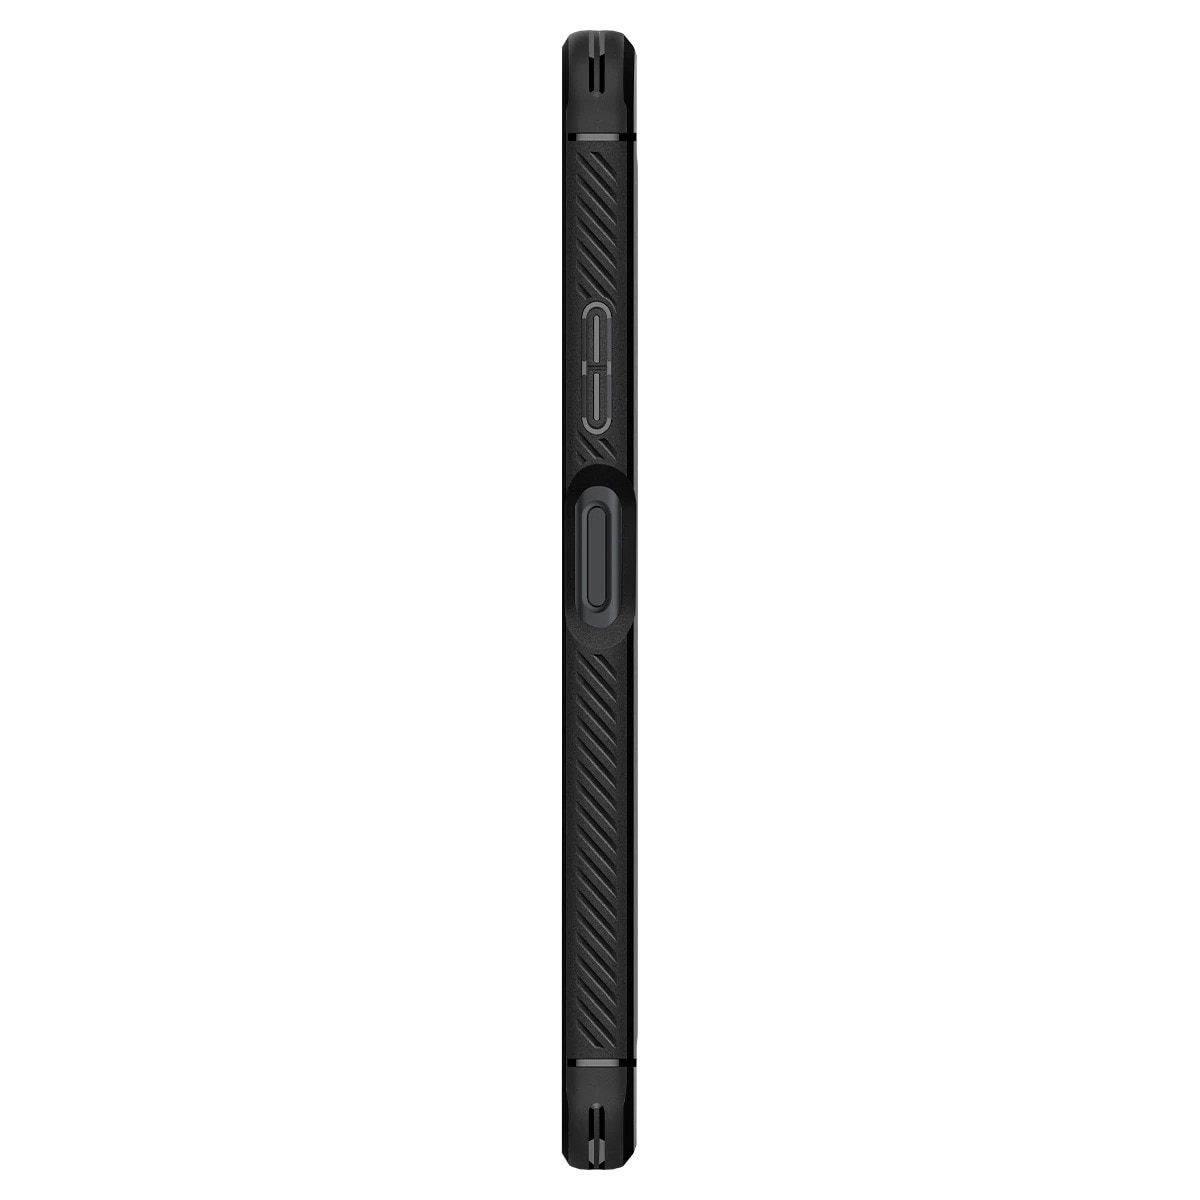 Sony Xperia 10 IV Case Rugged Armor Black